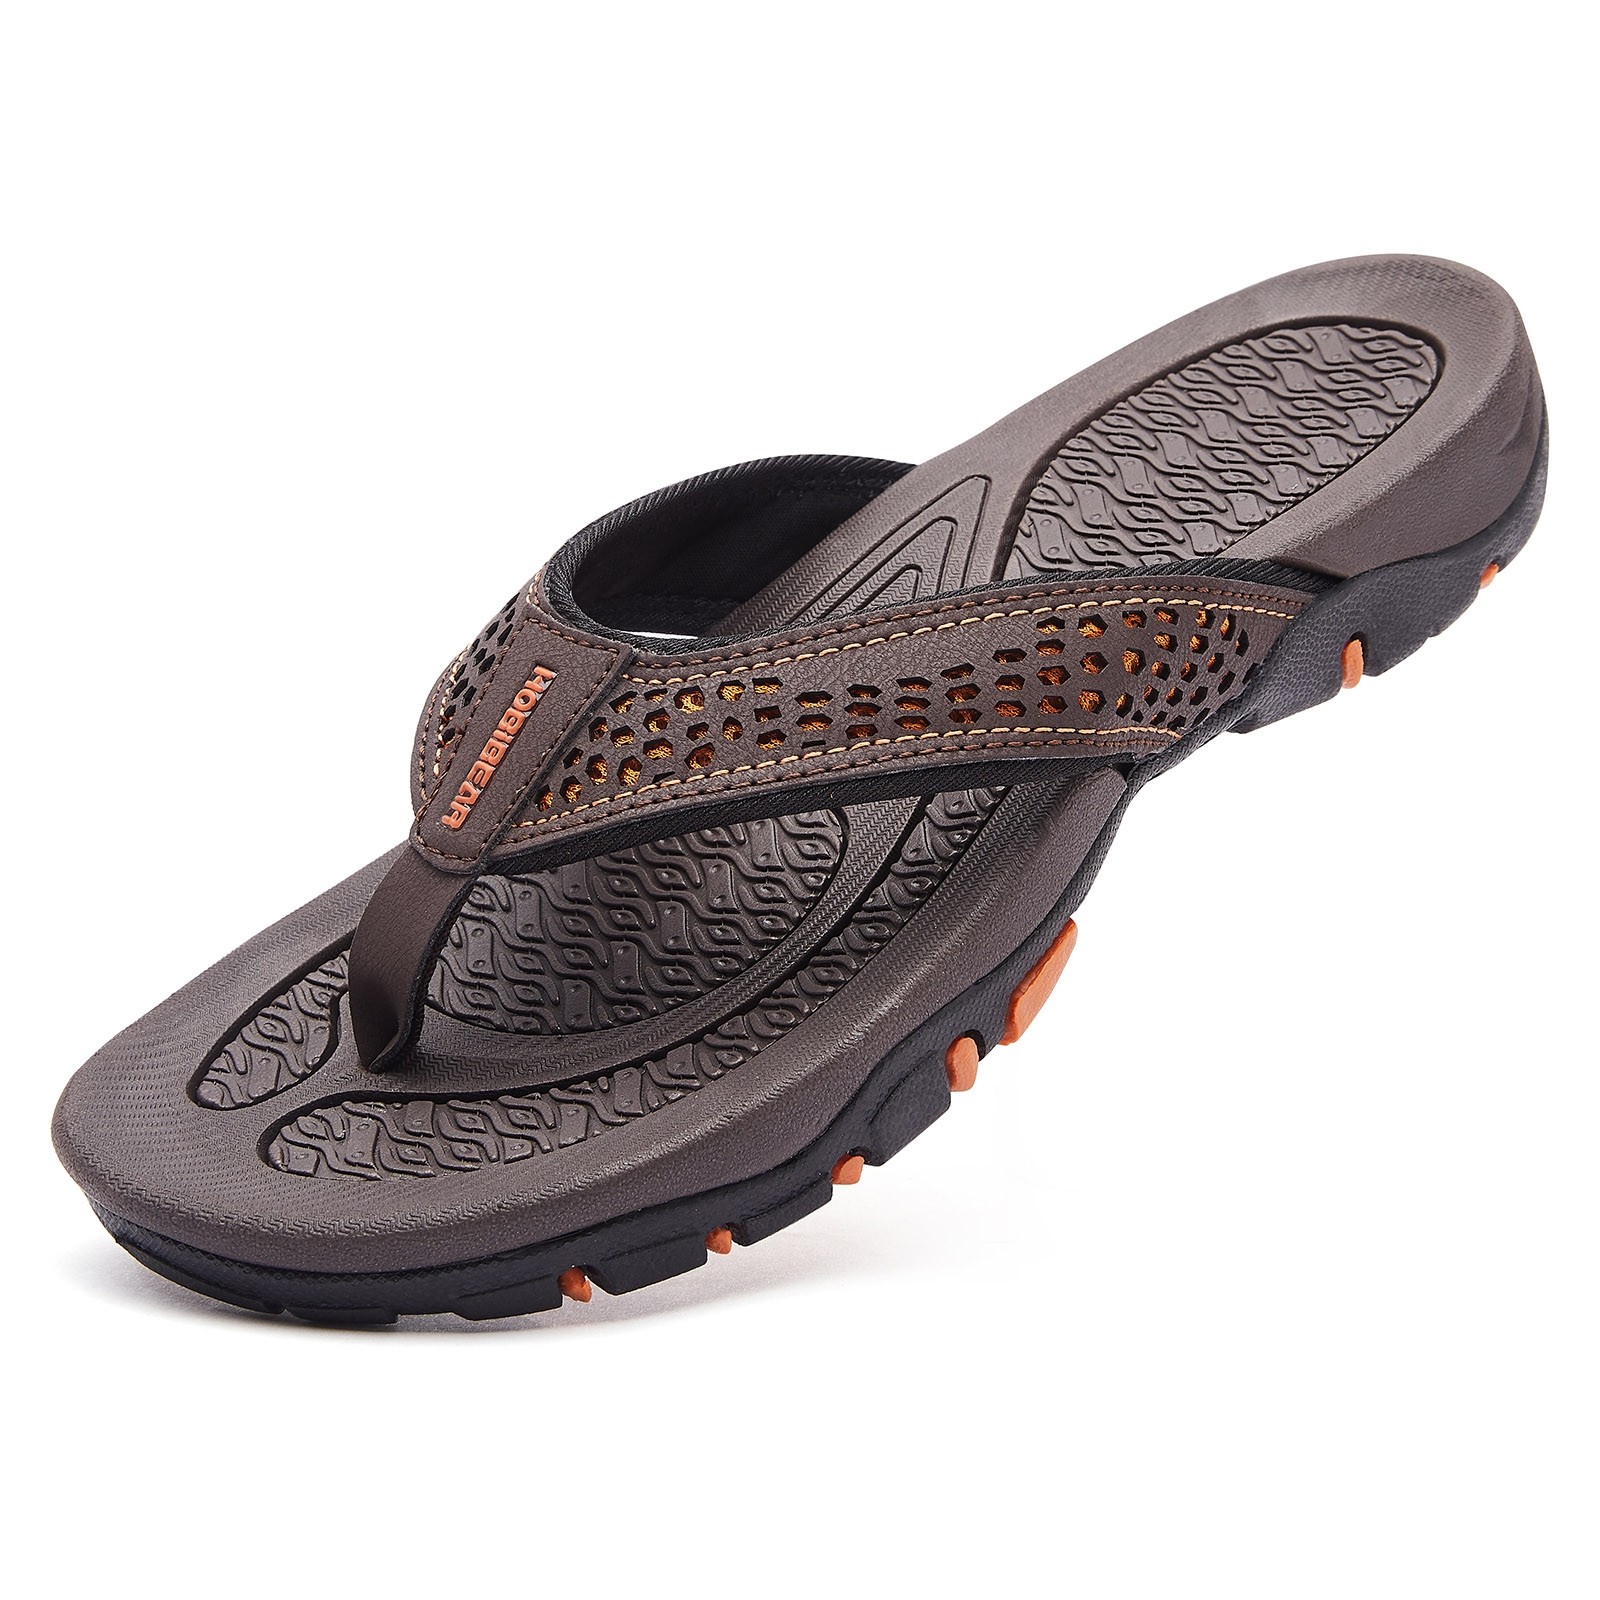 Mens Thong Sandals Indoor and Outdoor Beach Flip Flop Brown/Orange (Size 11)